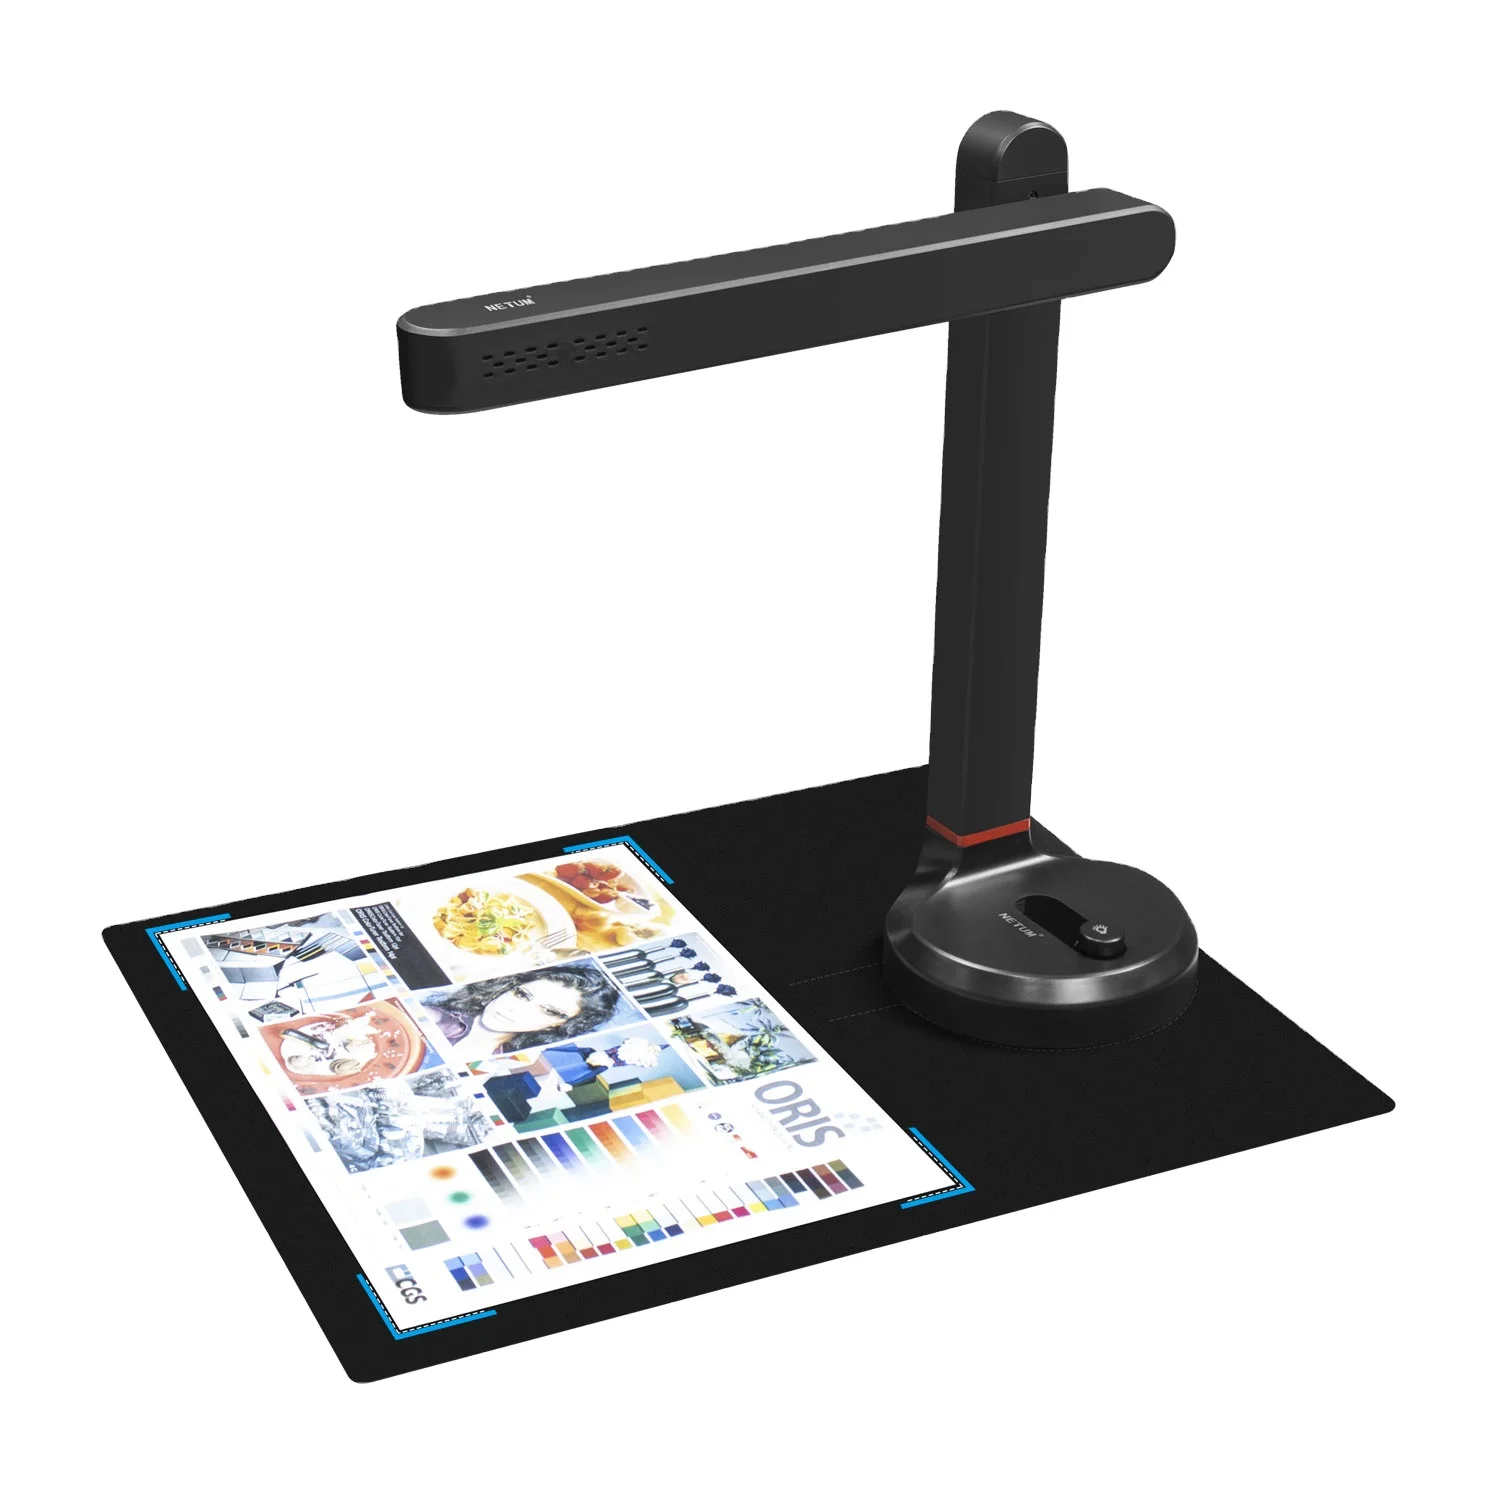 

NETUM Portable 16 Mega-pixel High Definition Book Scanner Capture Size A4 Document Camera for File Recognition Scanner